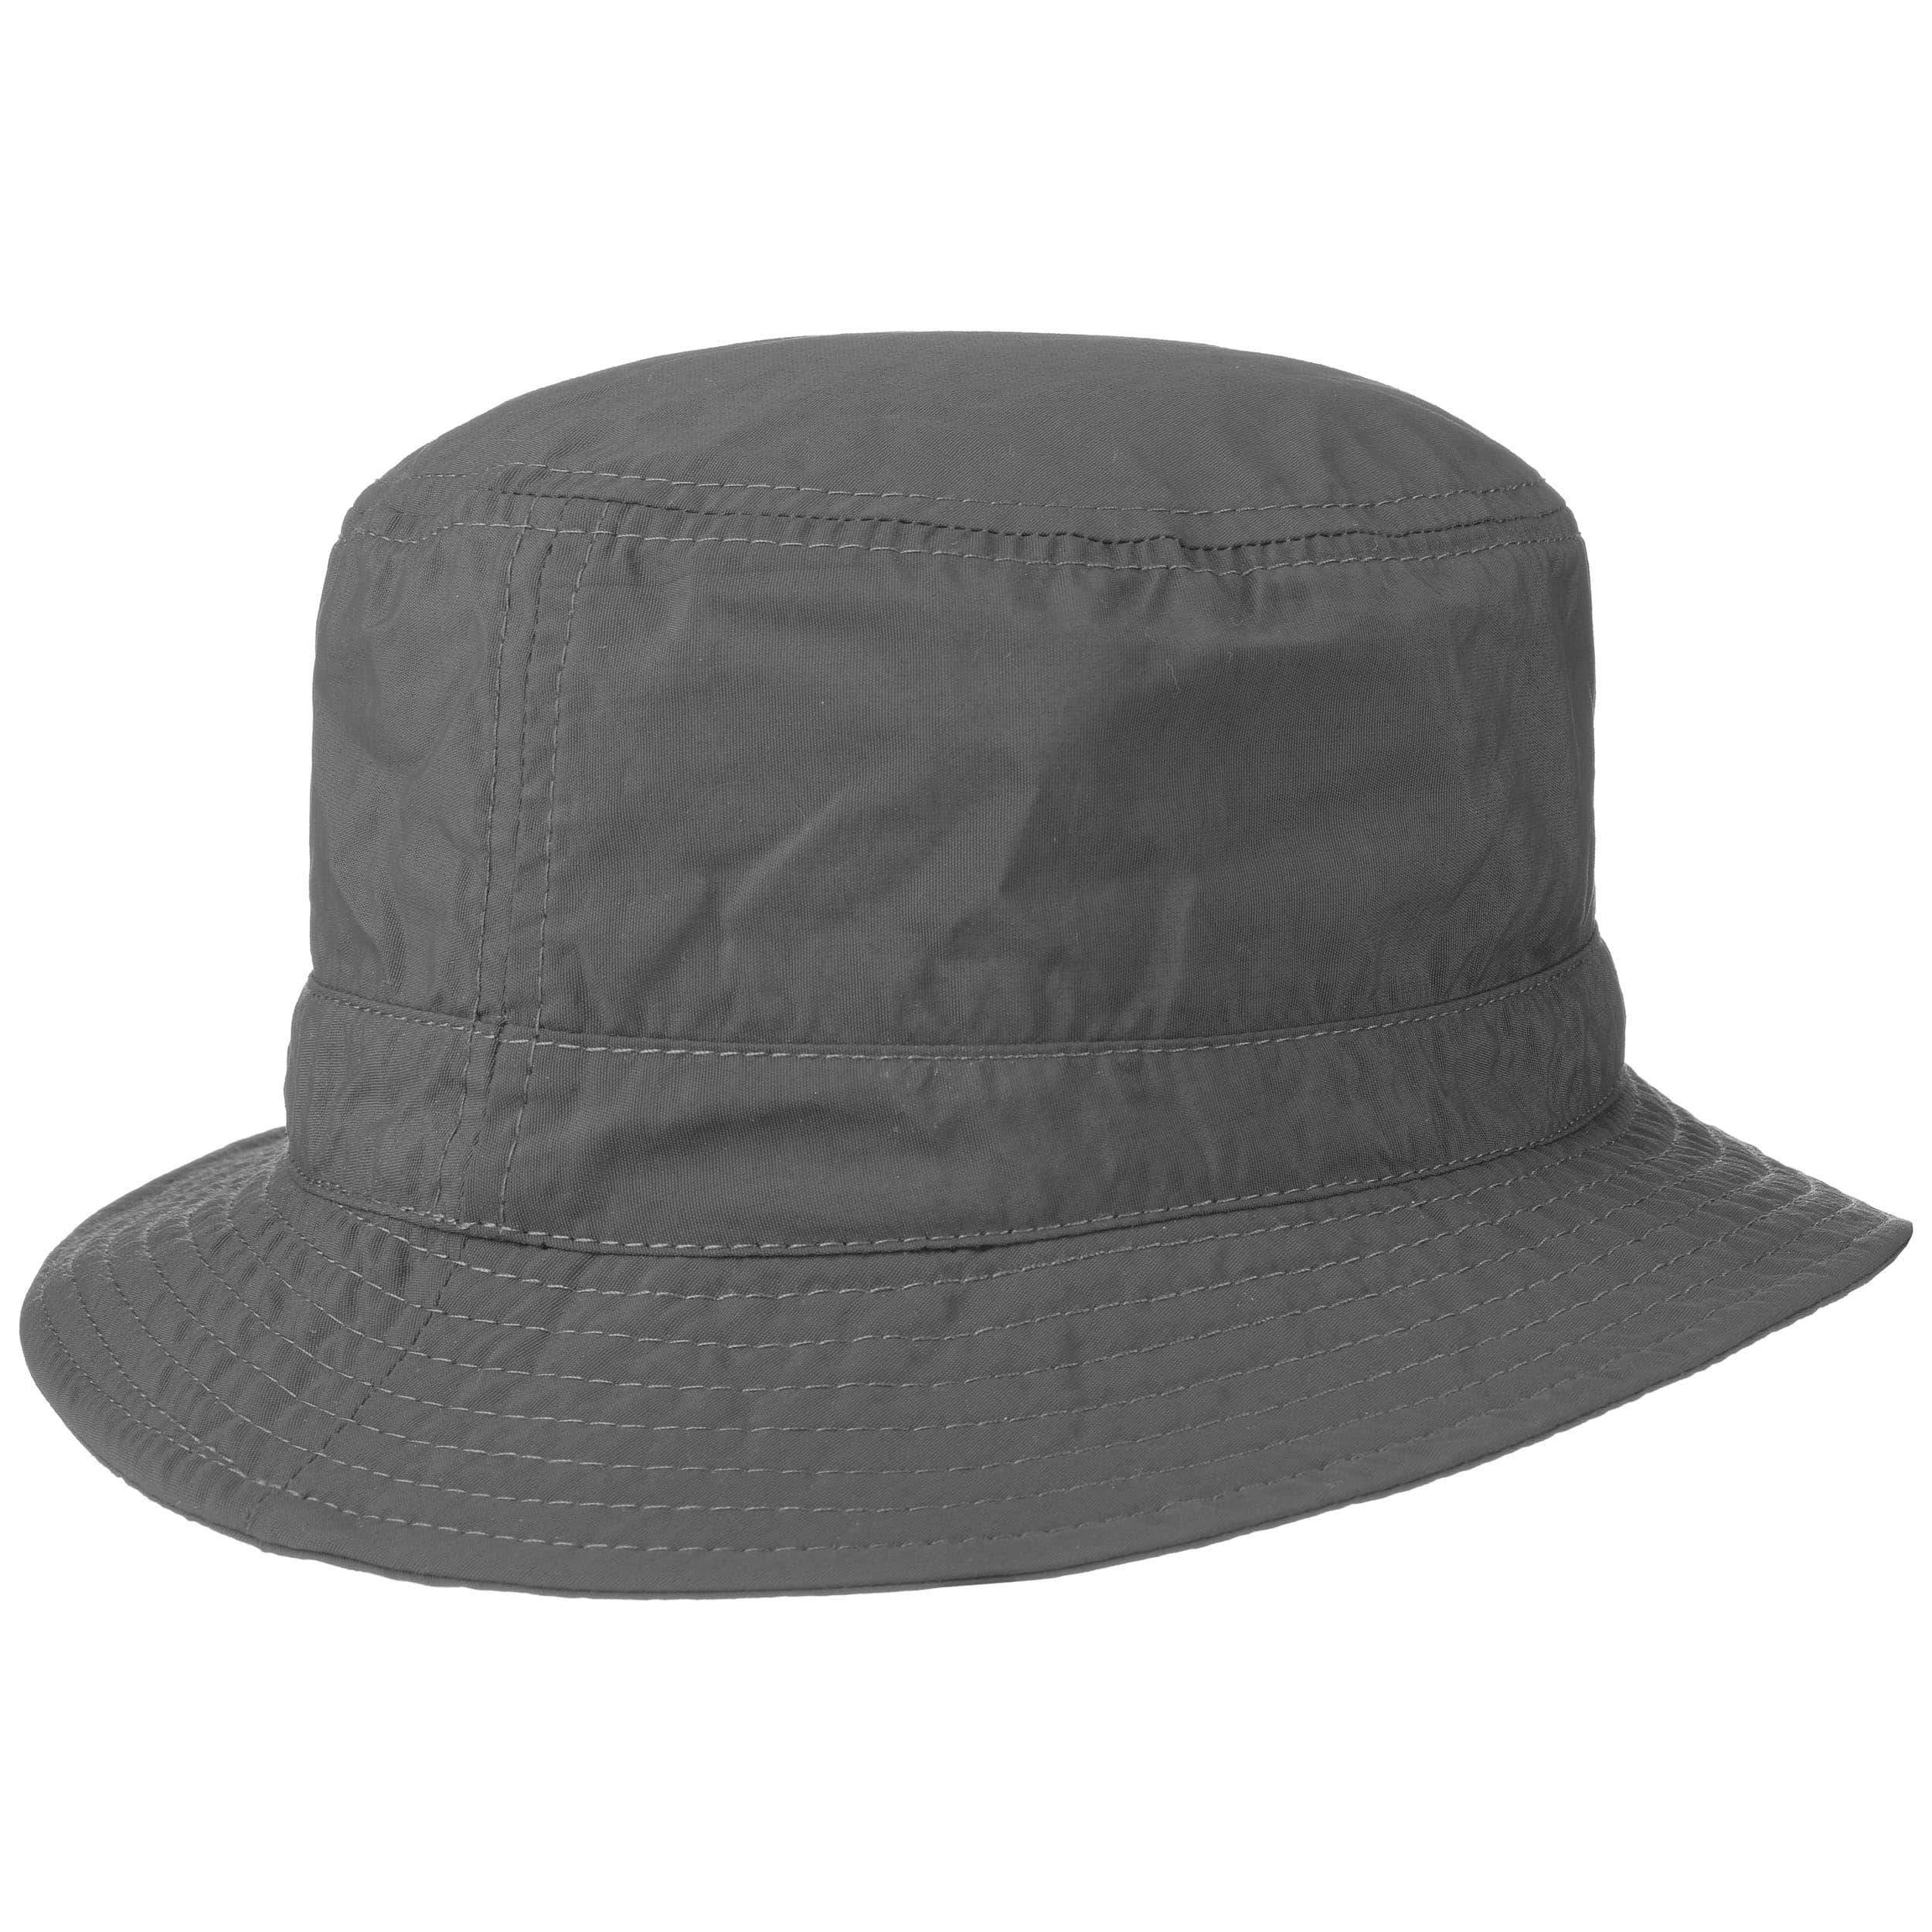 Fishing Hat Classic by Lipodo - 15,95 £